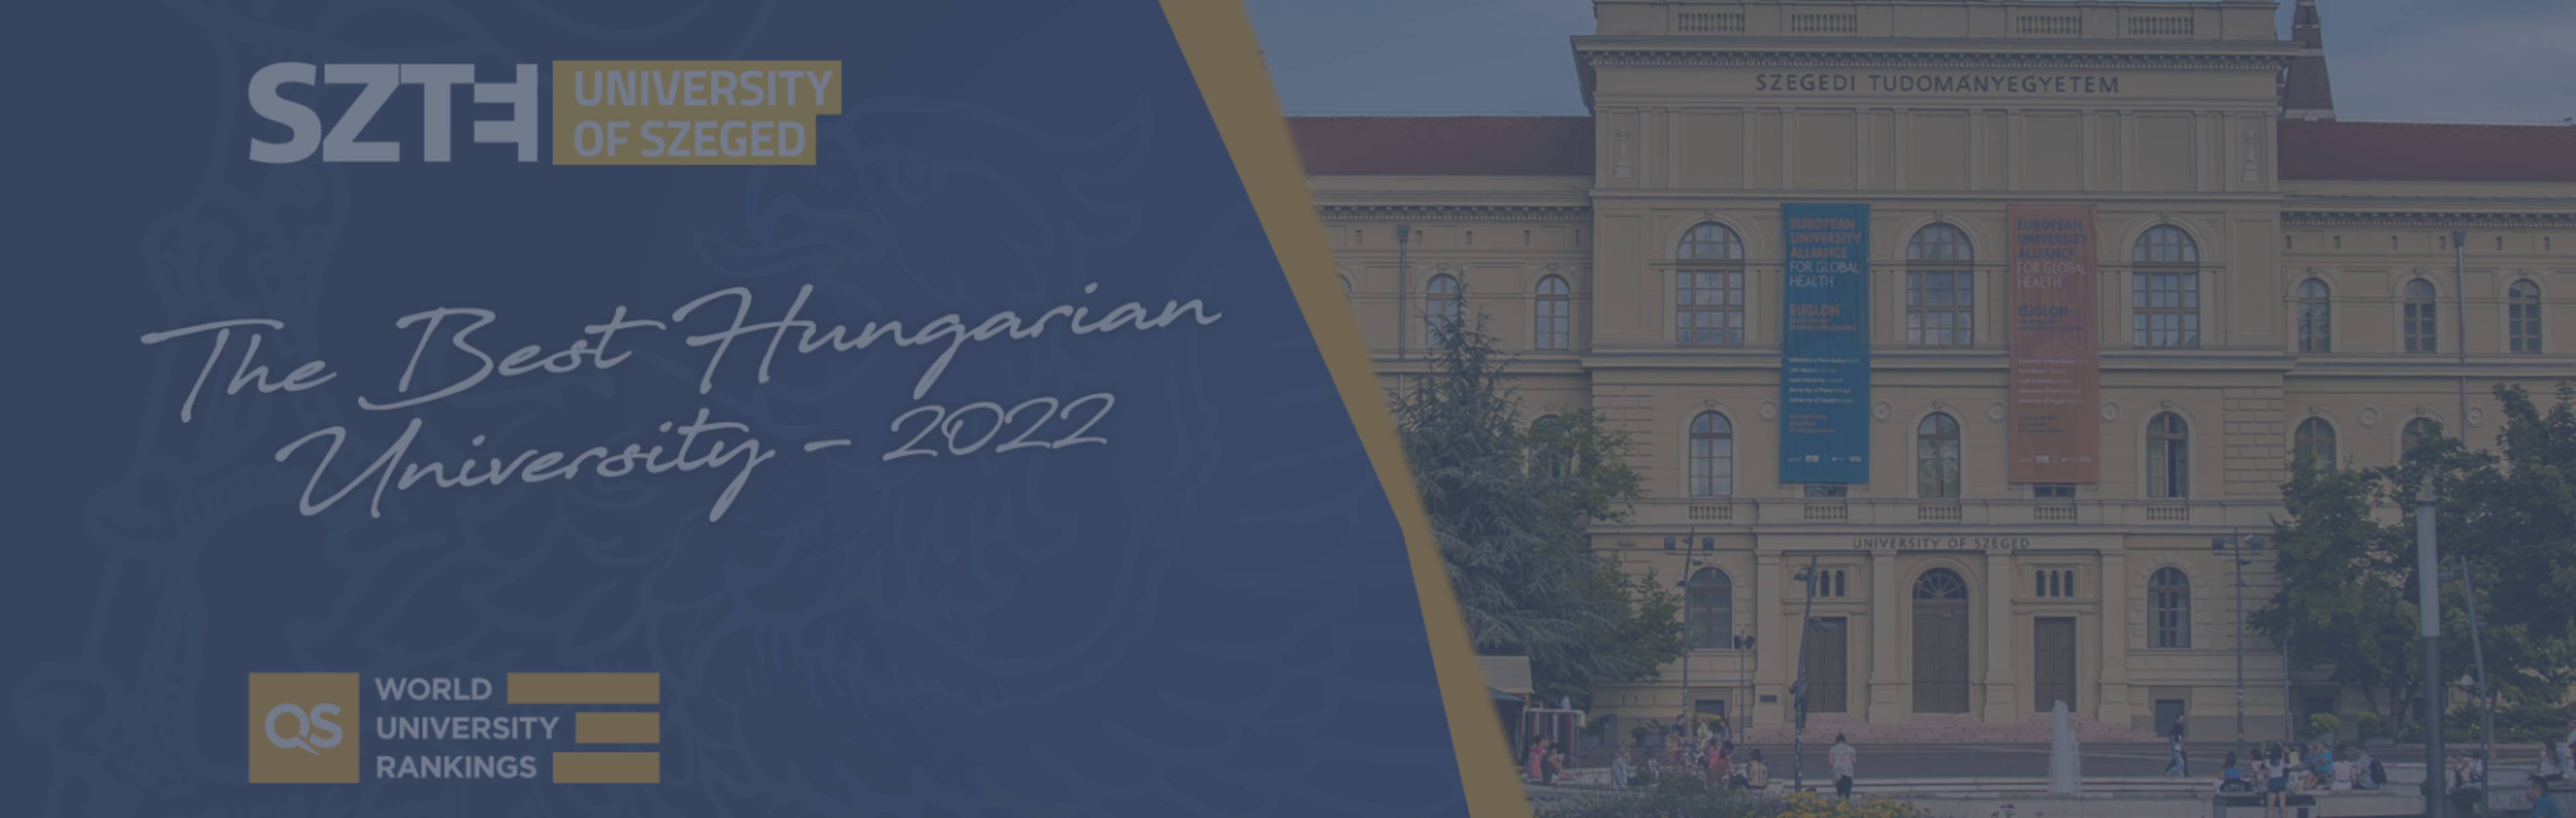 University of Szeged 比較知的財産法におけるLLM